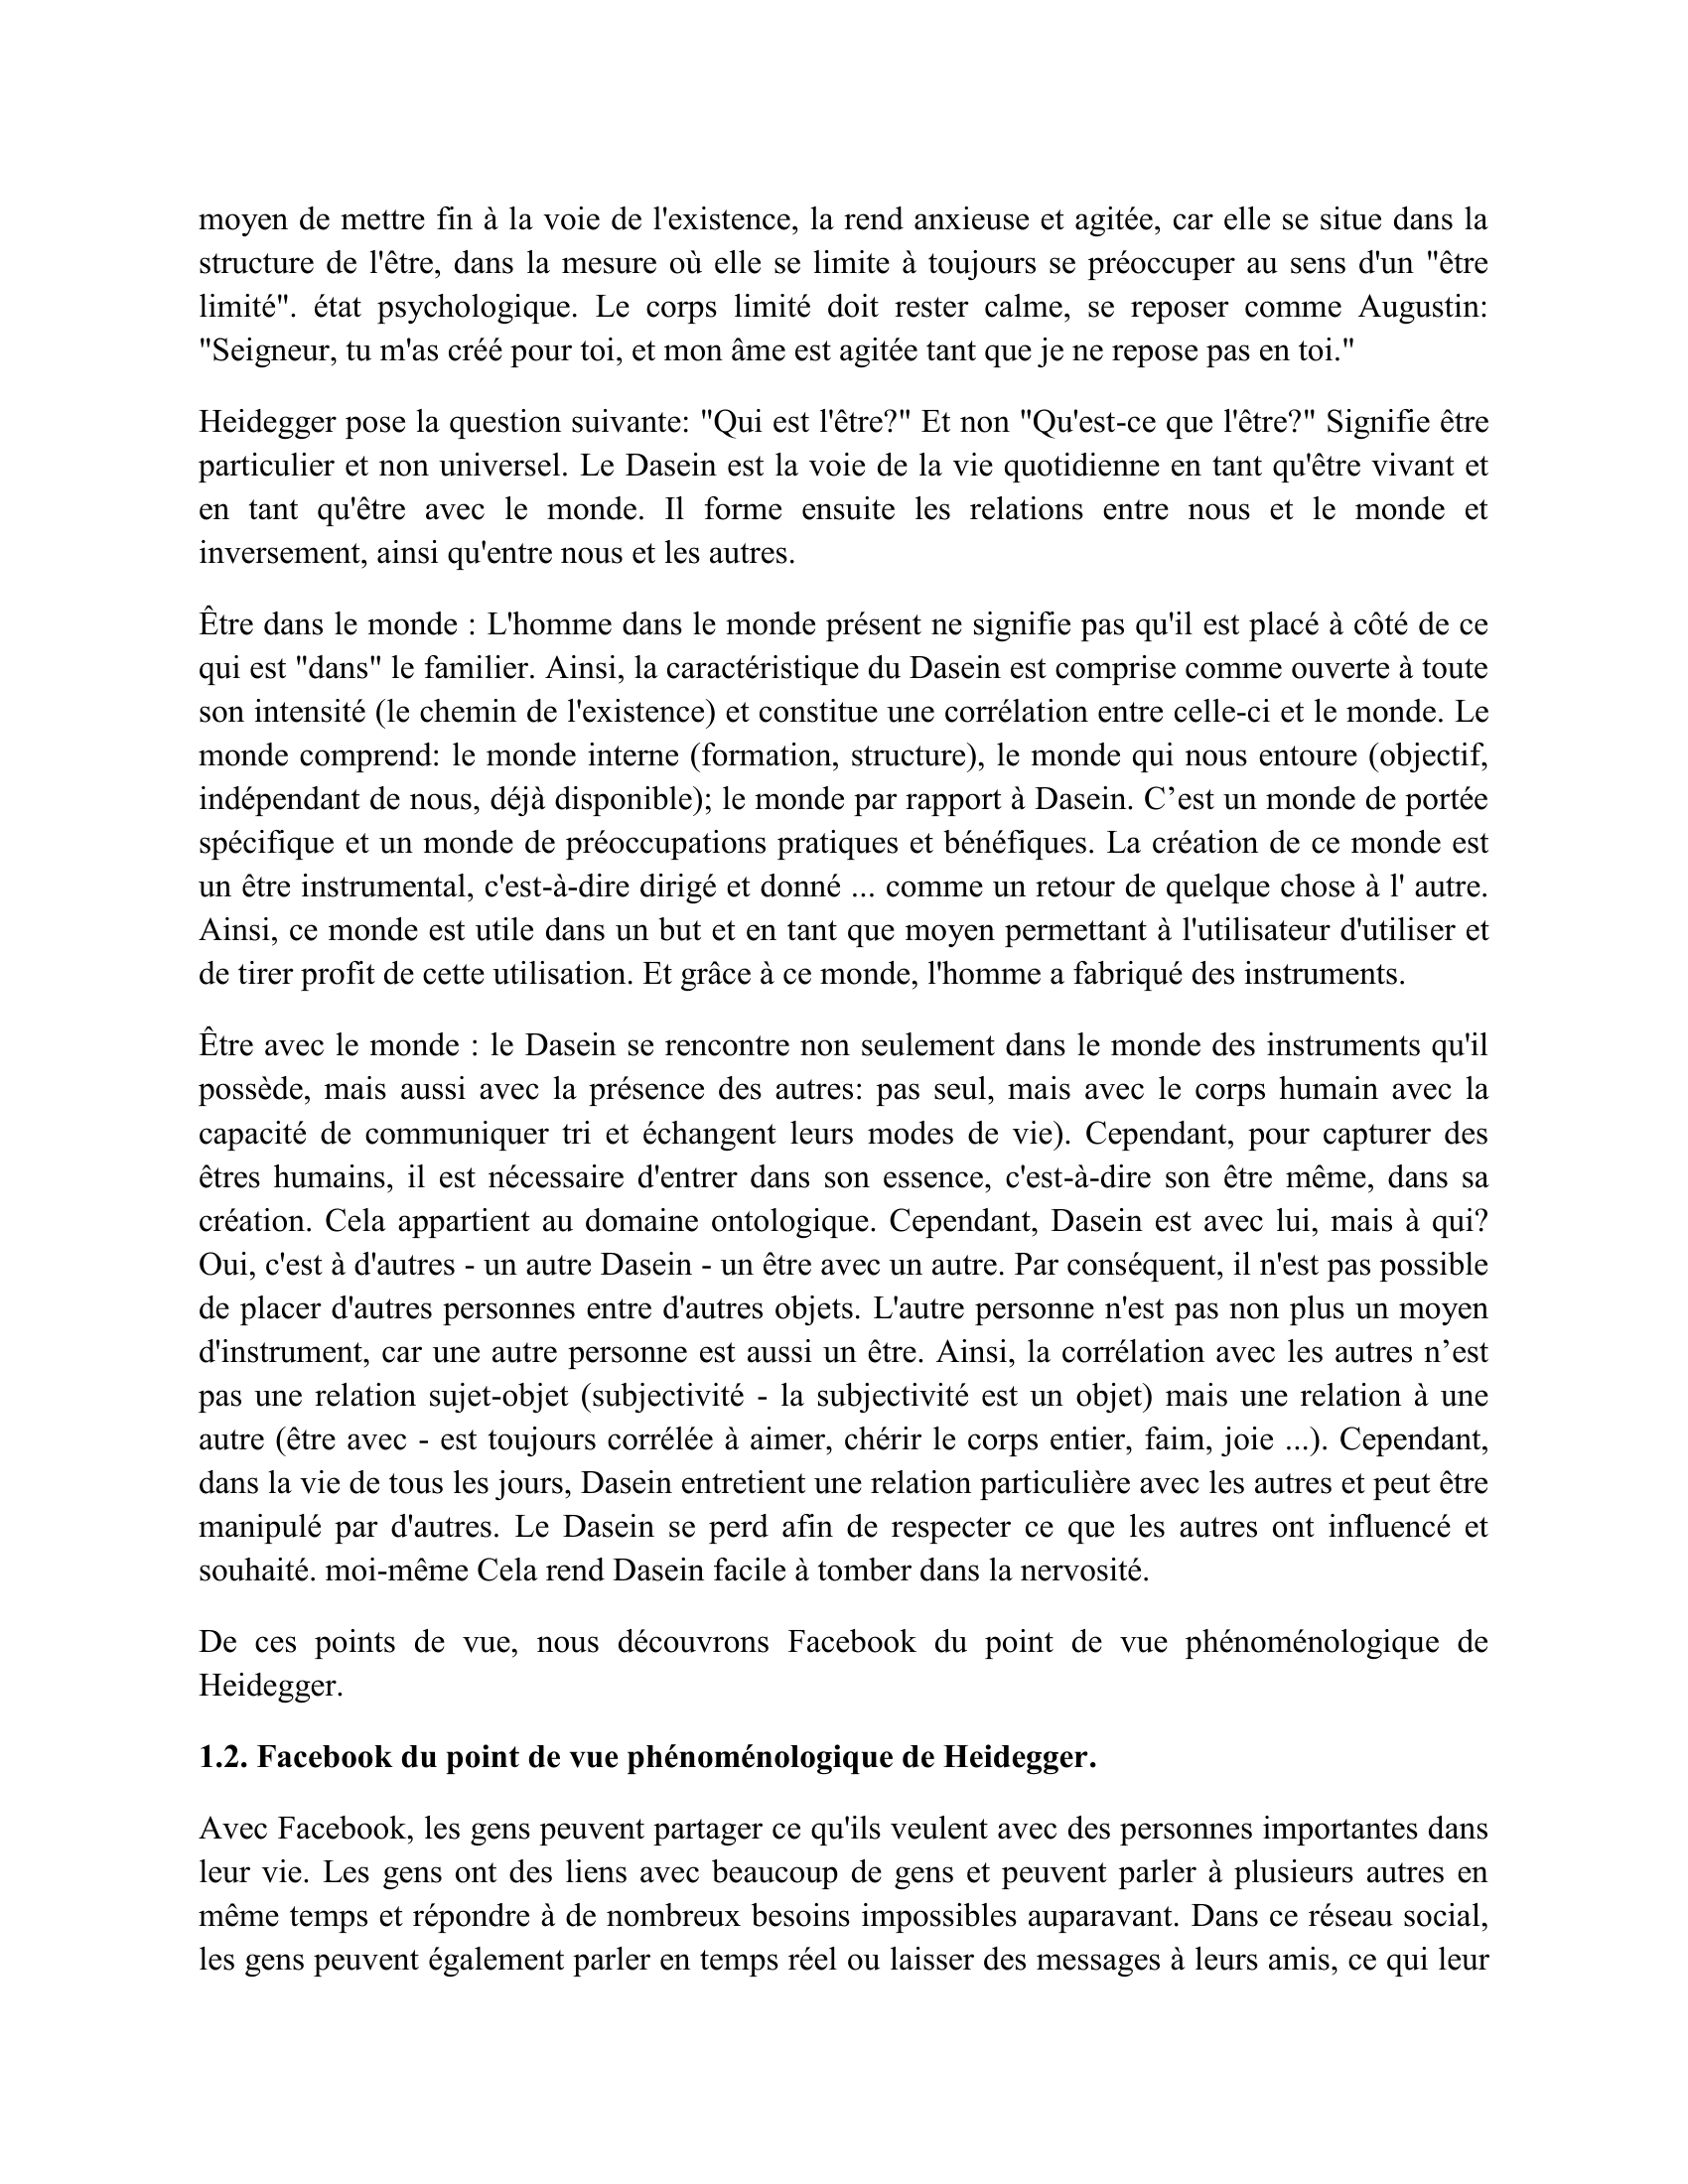 Prévisualisation du document Phénoménologie de facebook 

 
I.